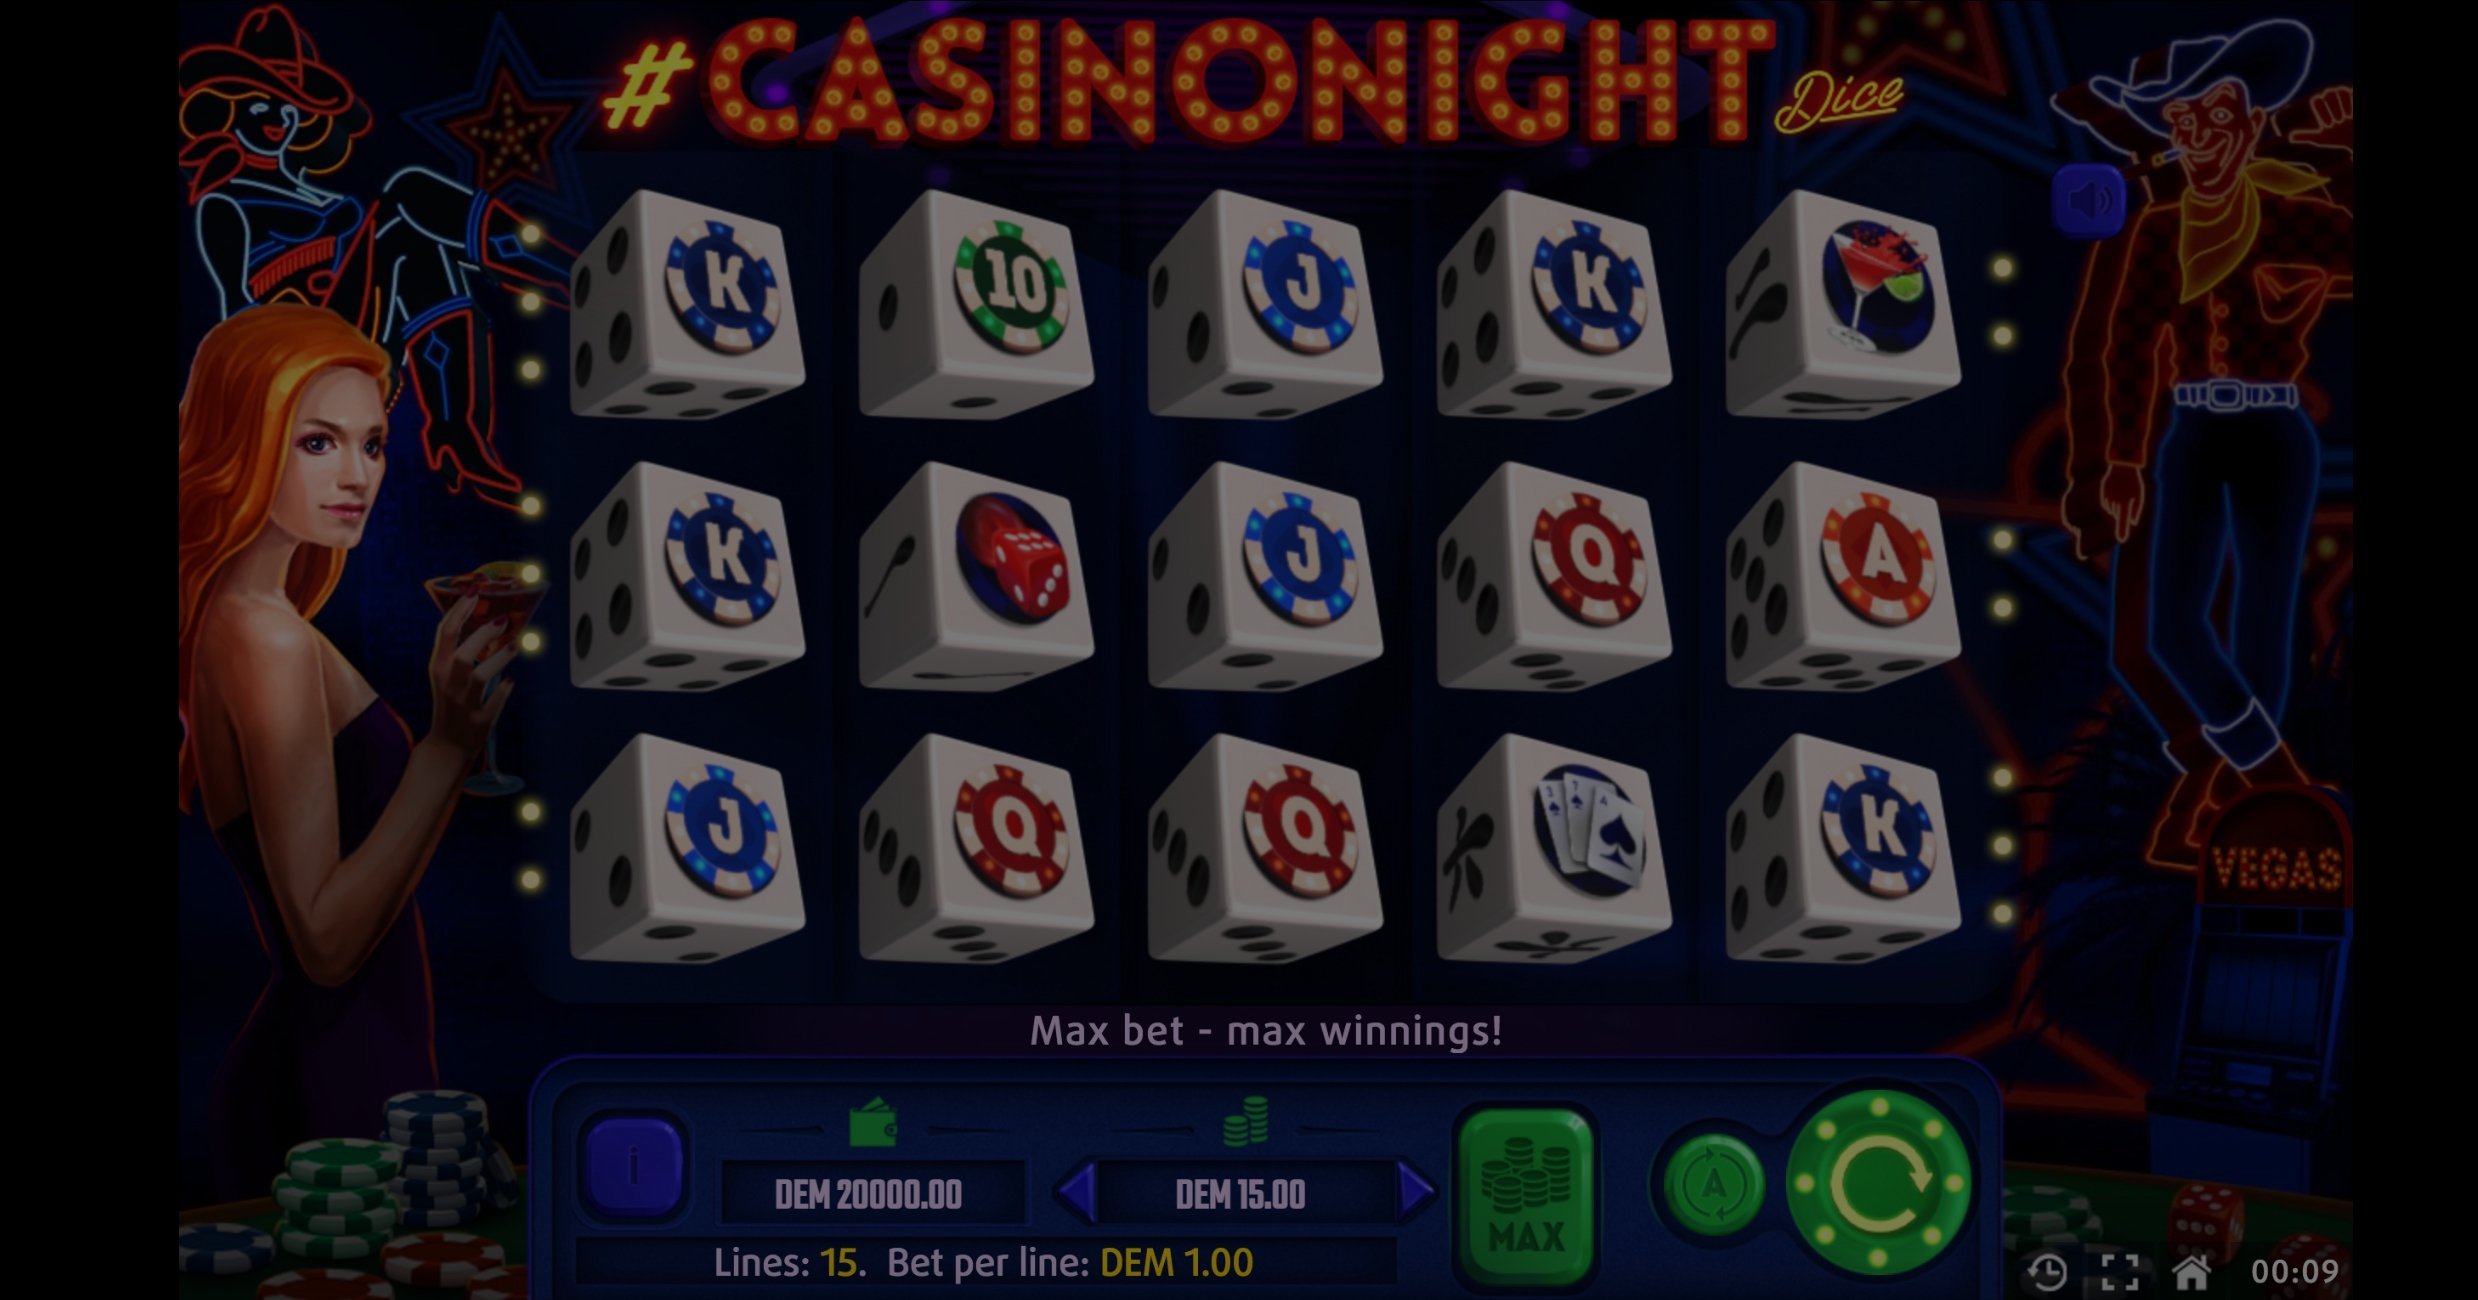 #Casinonight Dice demo